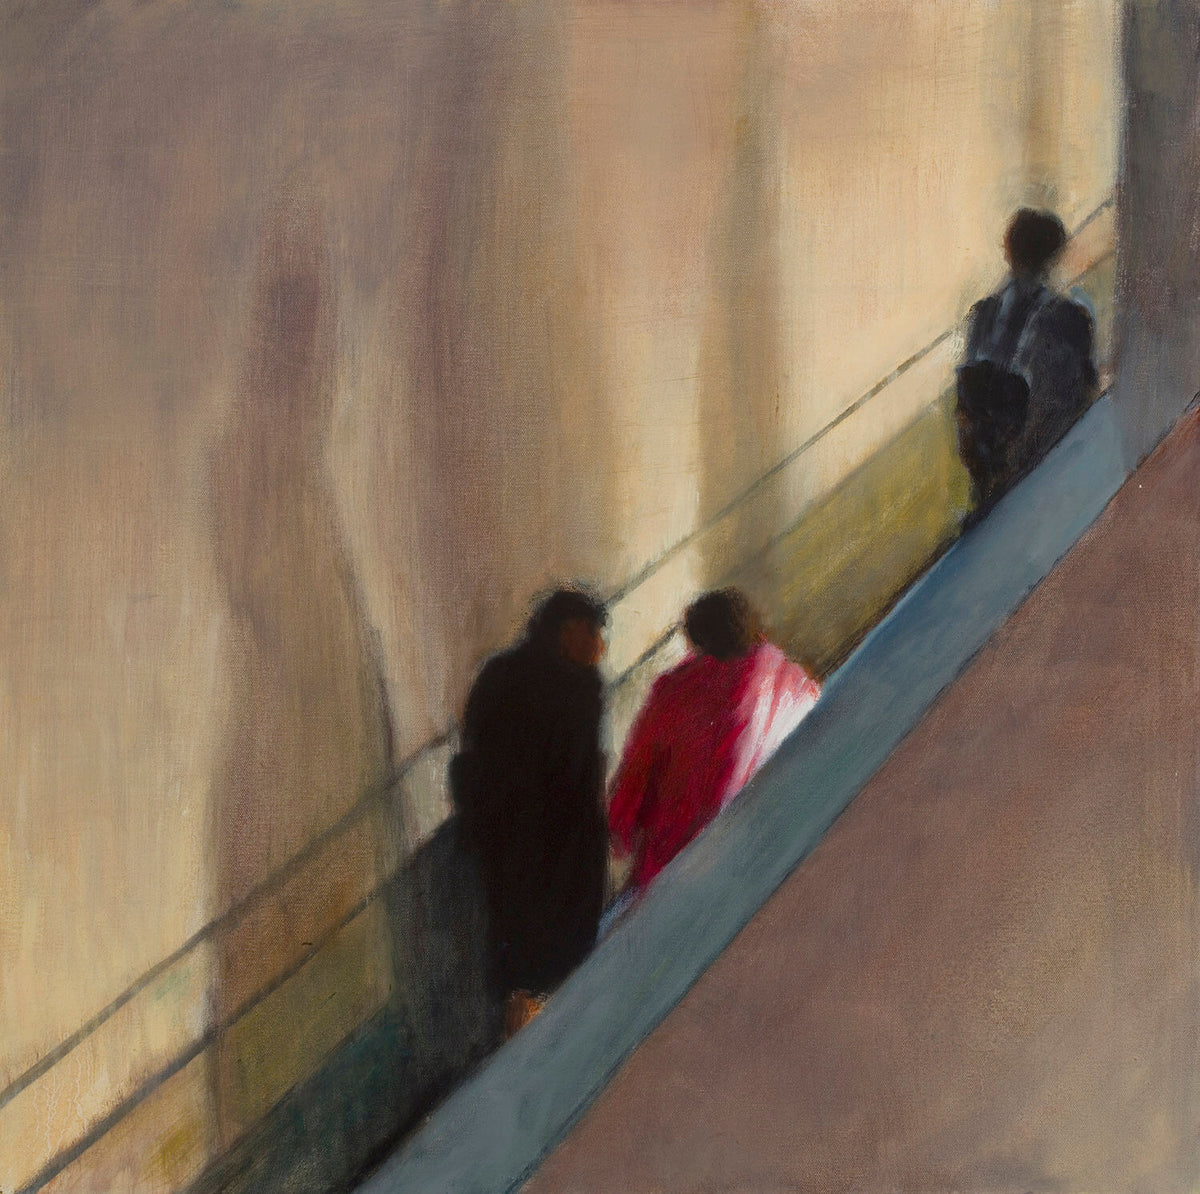 Escalator National Portrait Gallery